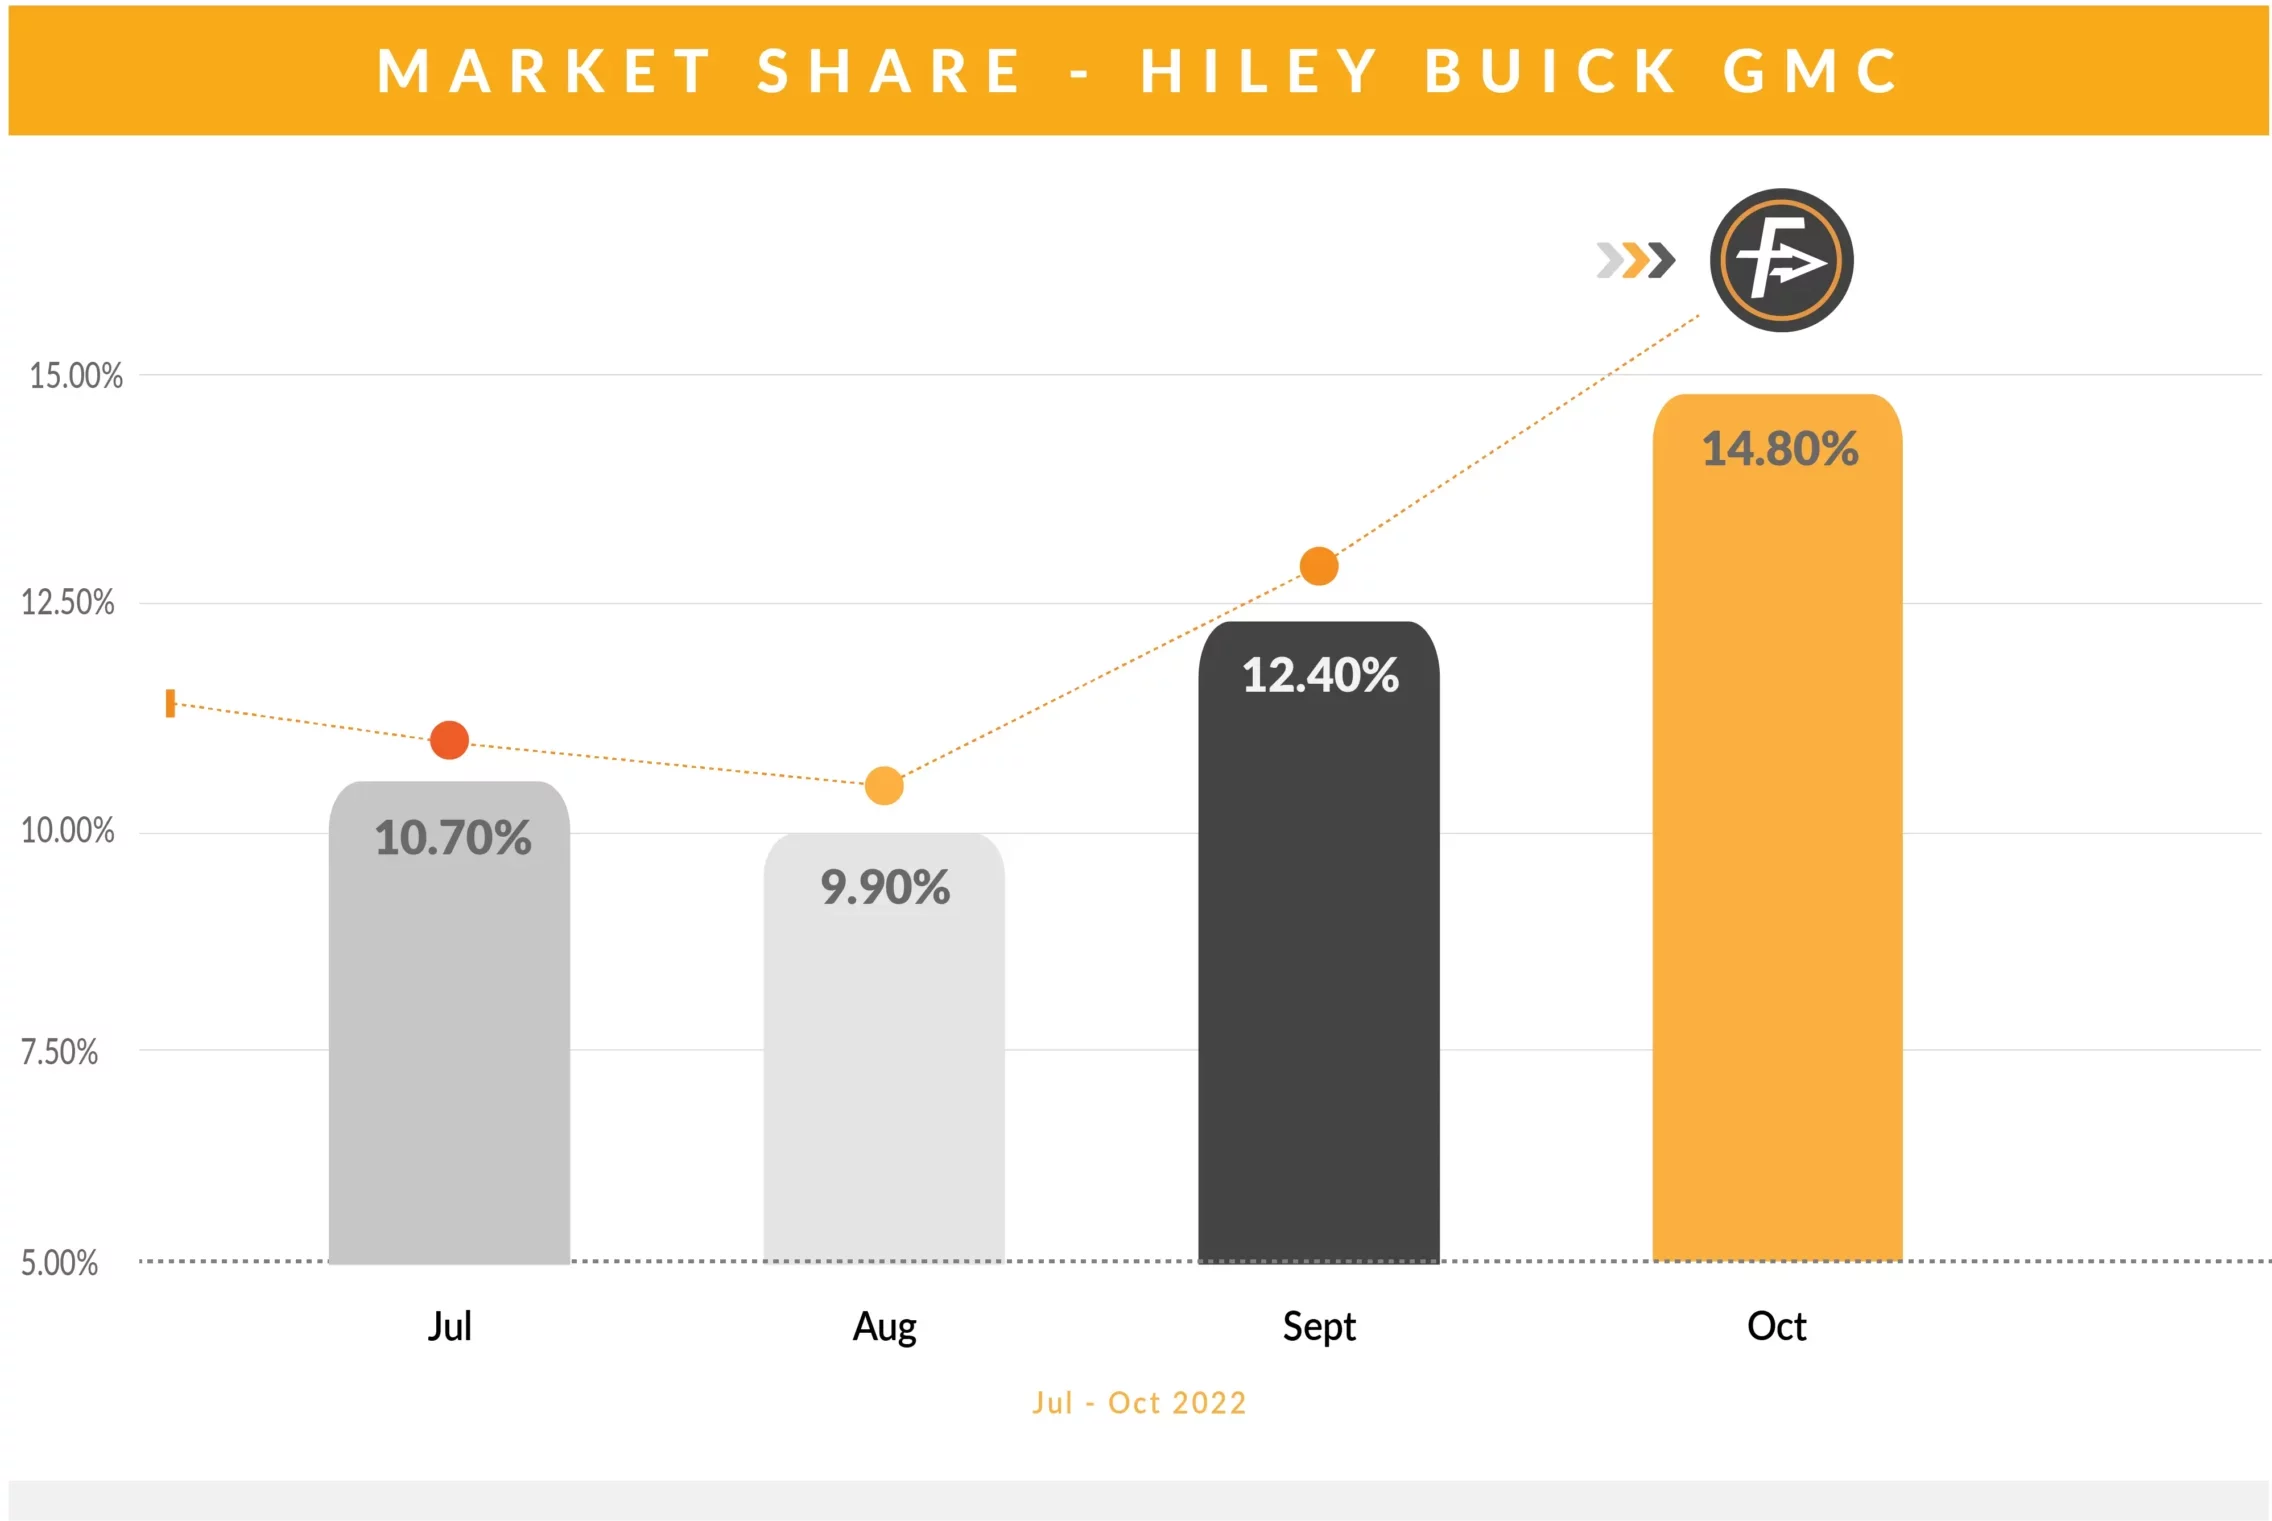 FF Market Share - Hiley Buick GMC (1)